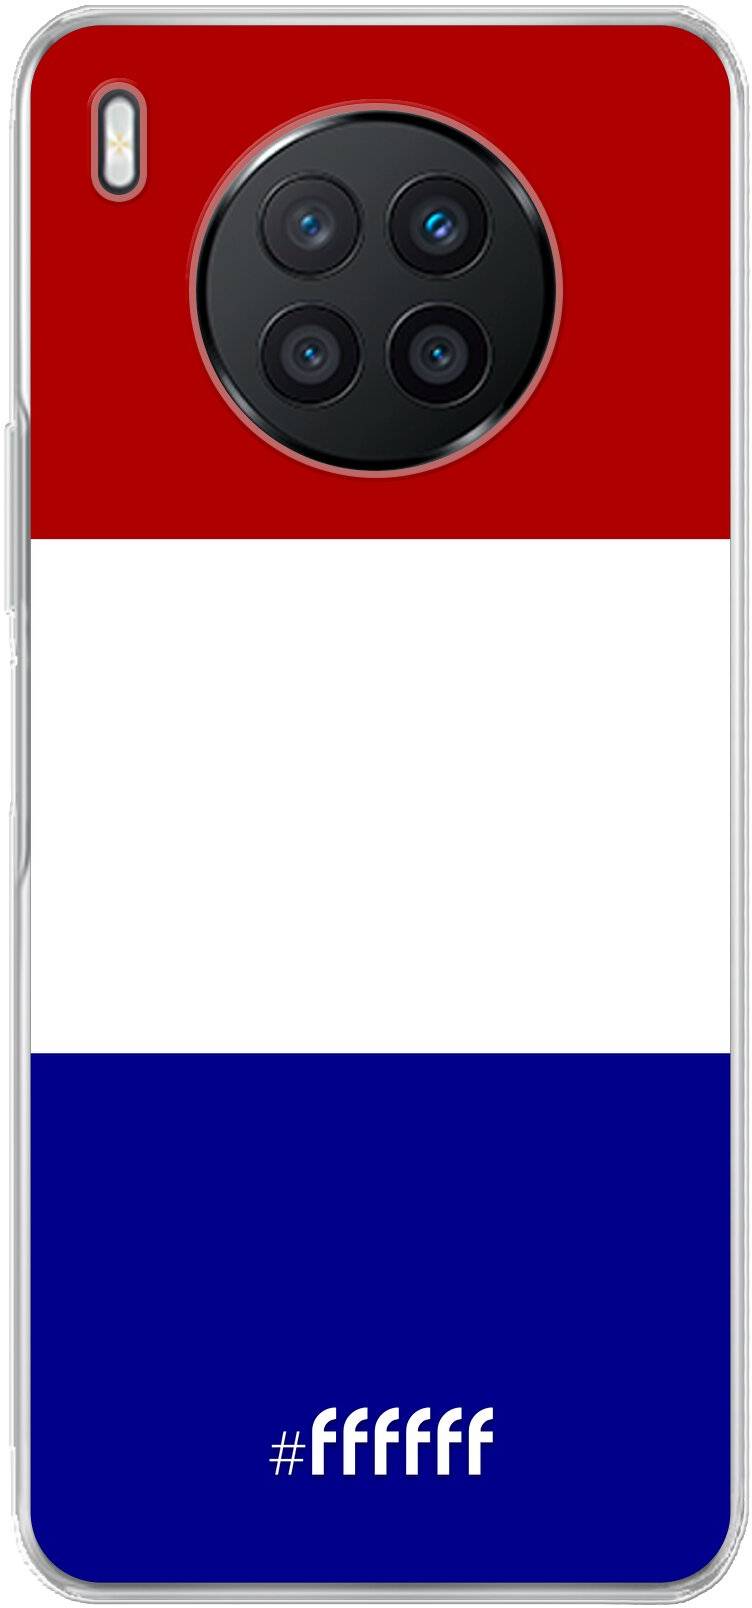 Nederlandse vlag Nova 8i